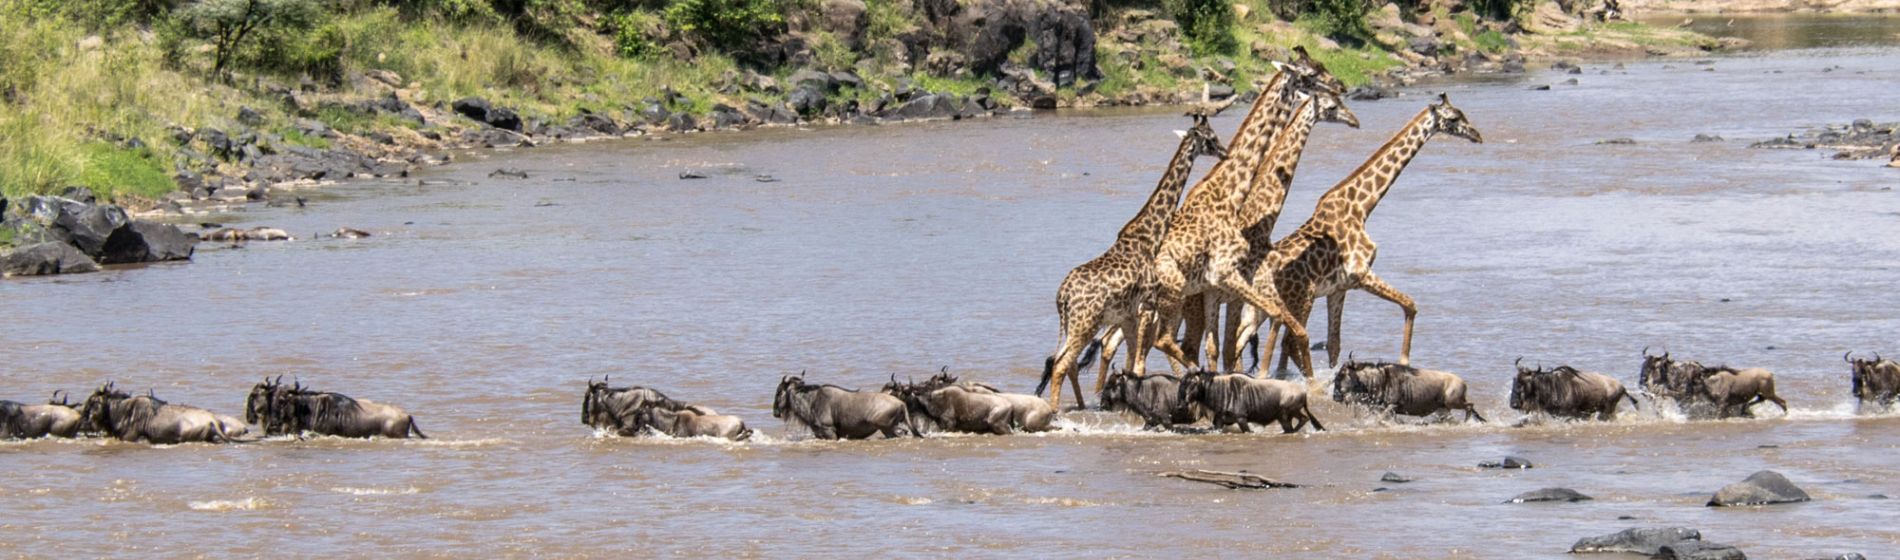 afrika_giraffe_and_gnus_crossing_river_gm_2_aaron_clare.jpg